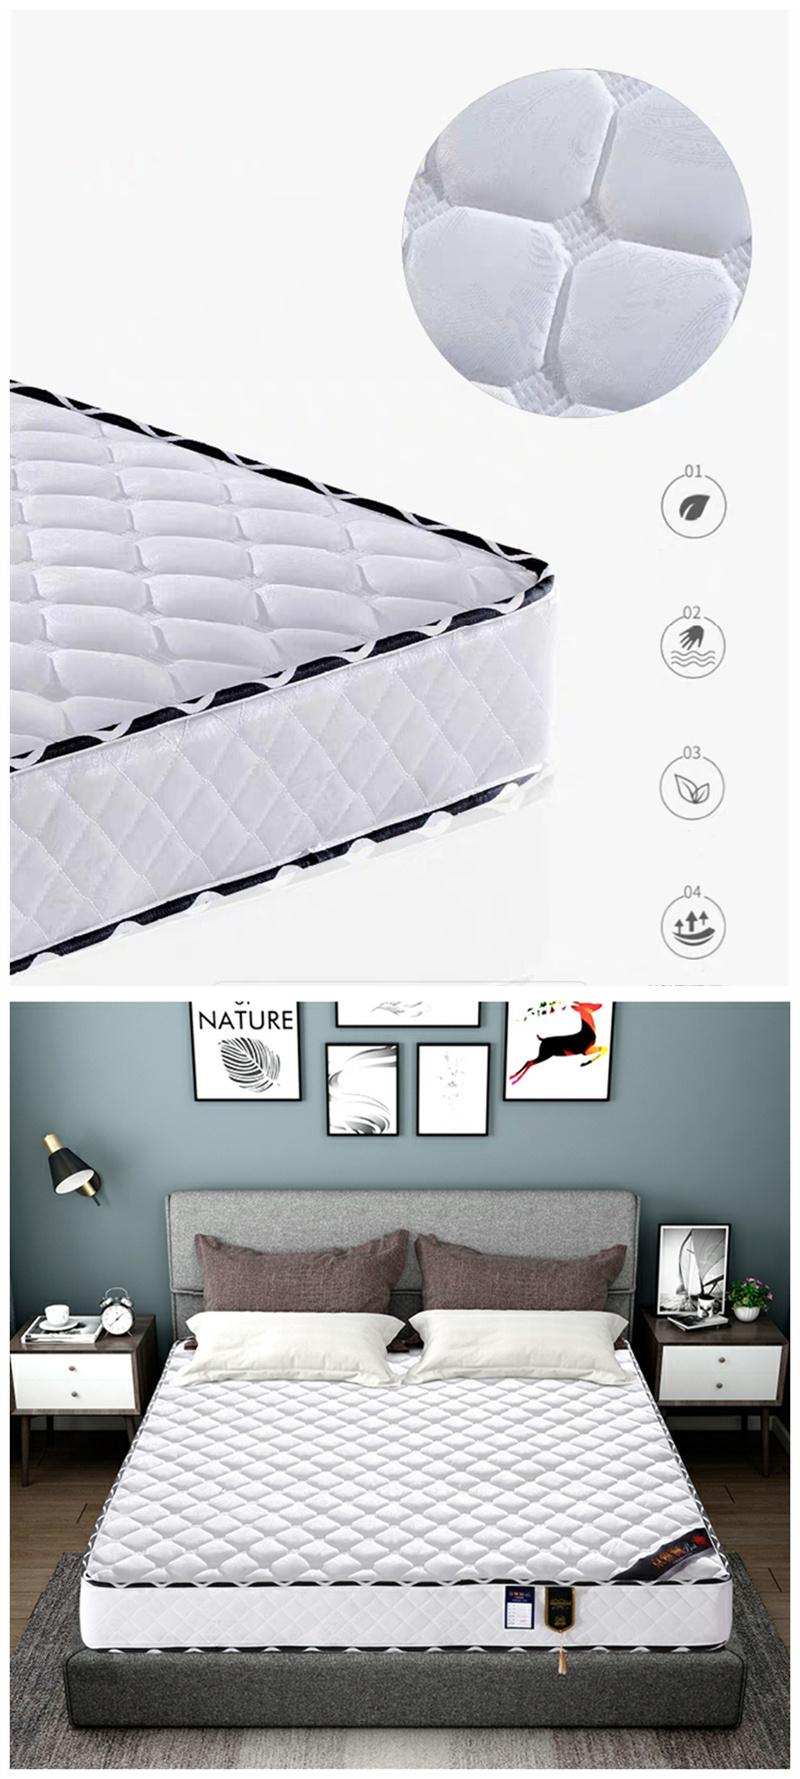 Home Products Living Room Furniture Bedroom Set Beds Mattresses High Density Memory Sponge Bed Mattress